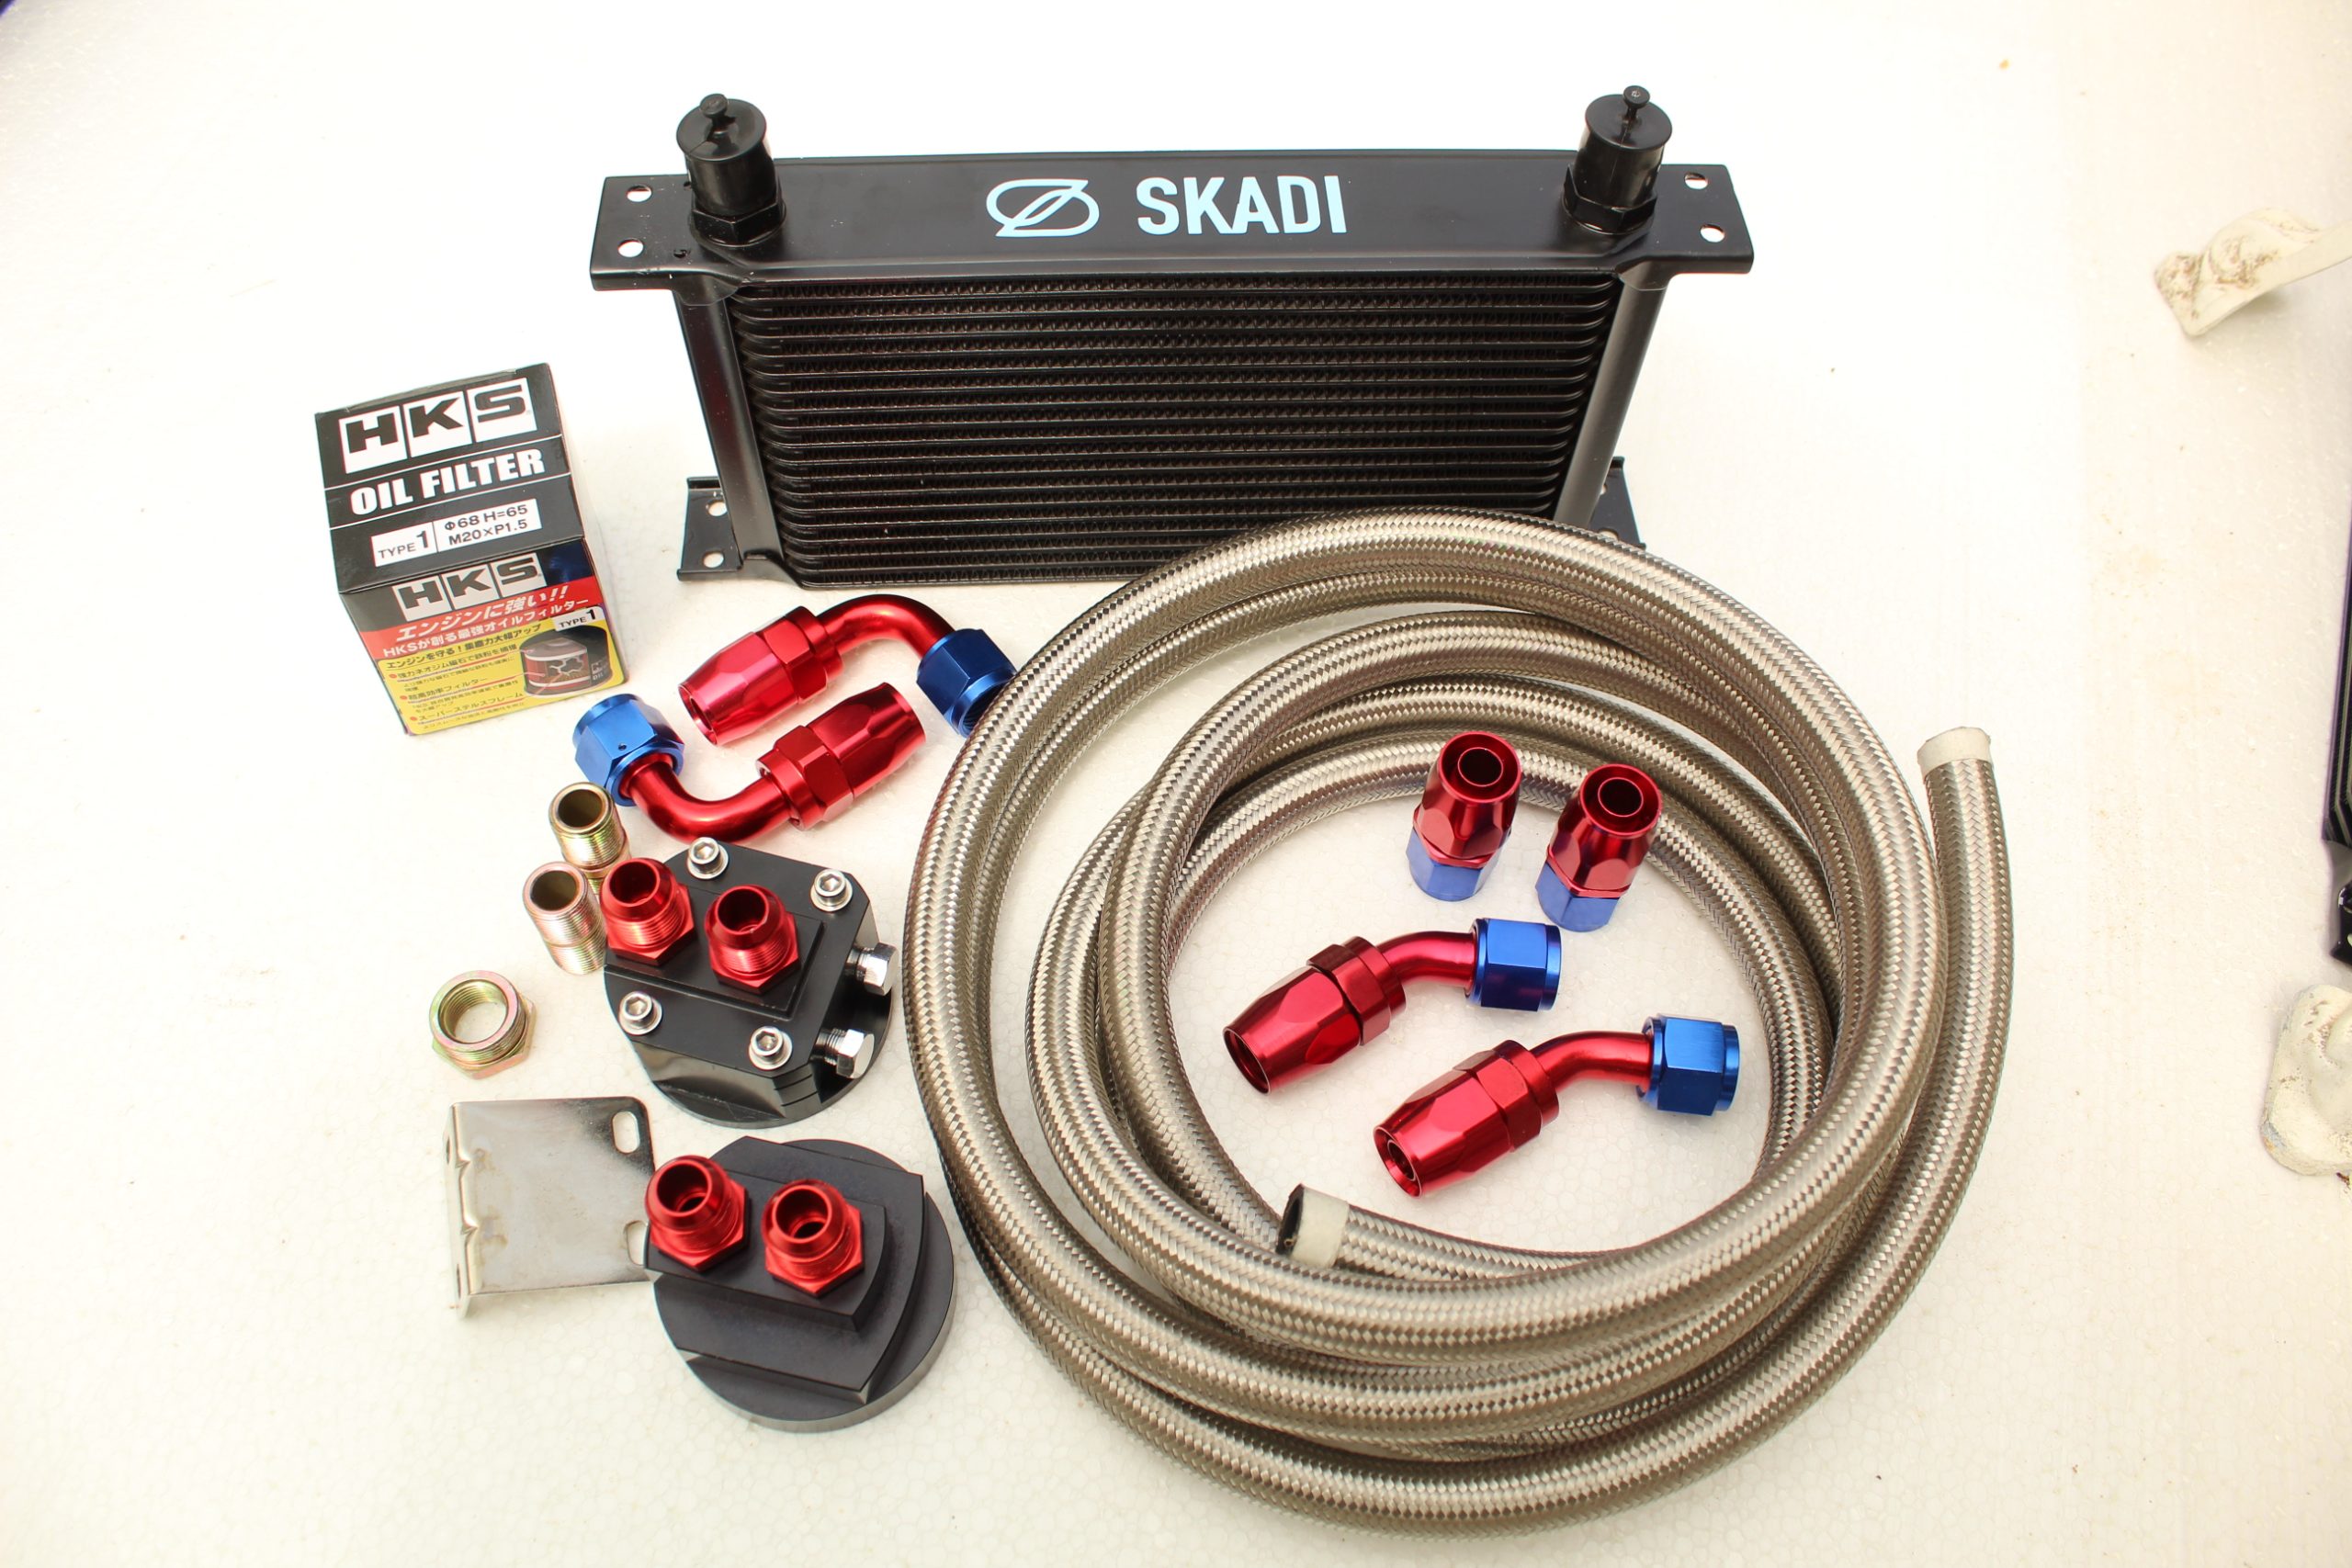 10 Row Oil Filter Relocation Kit + HKS Filter for Subaru Impreza WRX/STi All EJ20/25 Engines